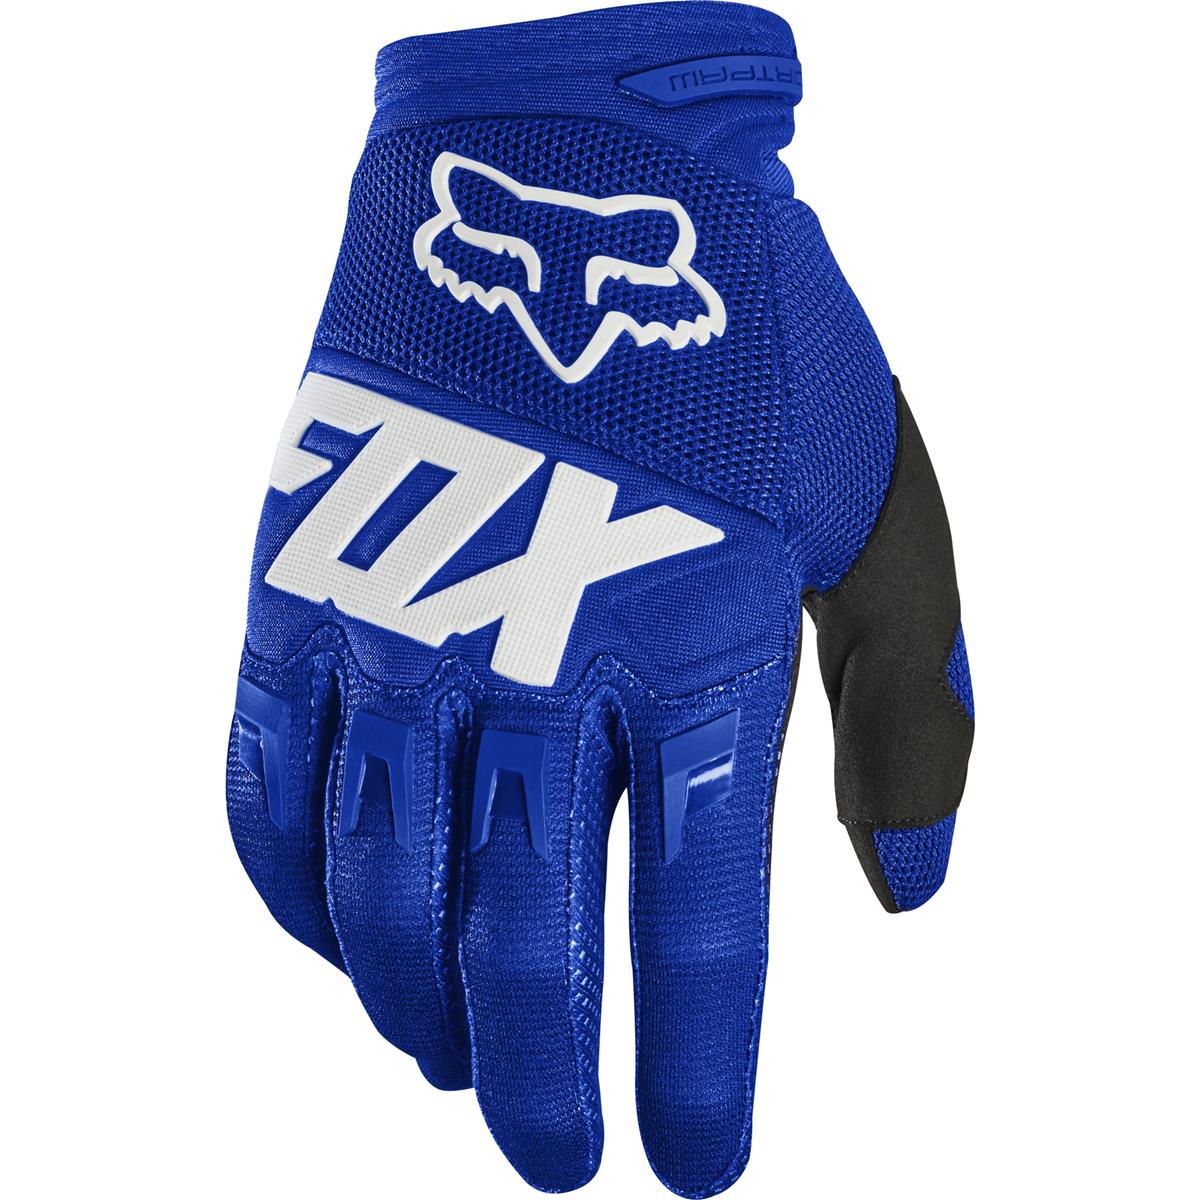 Fox Handschuhe Dirtpaw Race Blau/Weiß